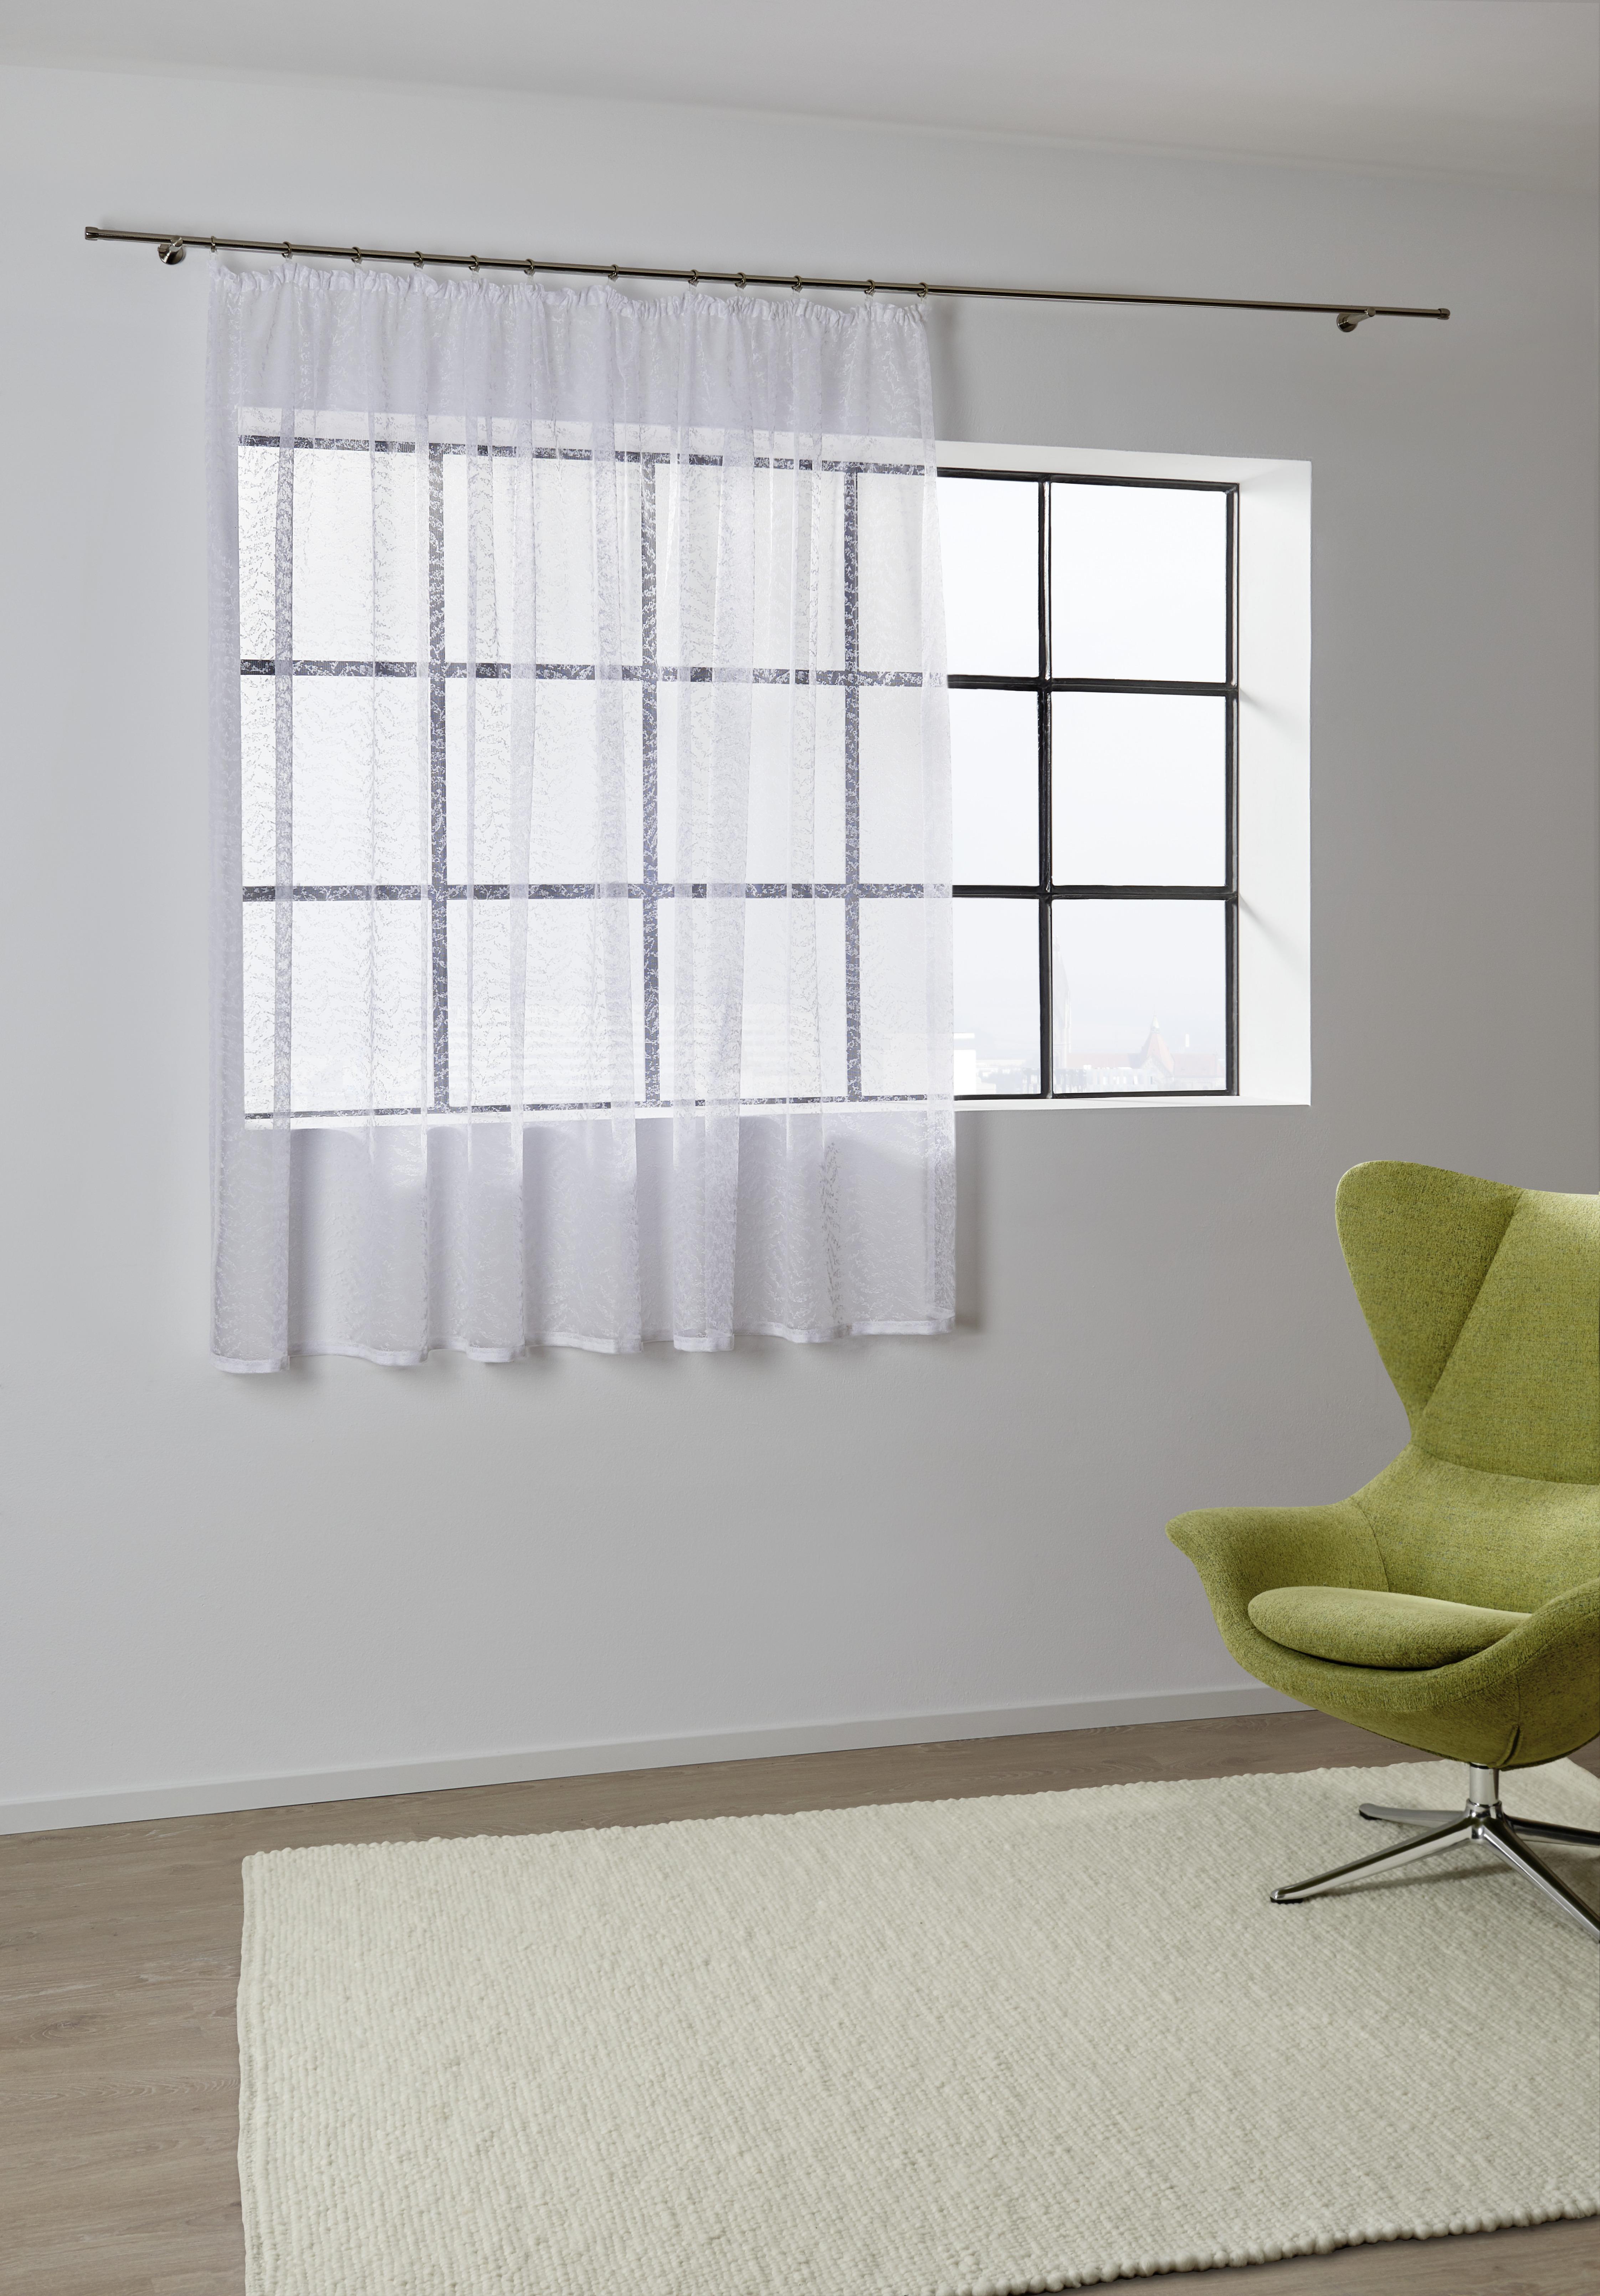 Fertigstore Rita Store 2 ca. 300x175cm - Weiß, KONVENTIONELL, Textil (300/175cm) - Modern Living